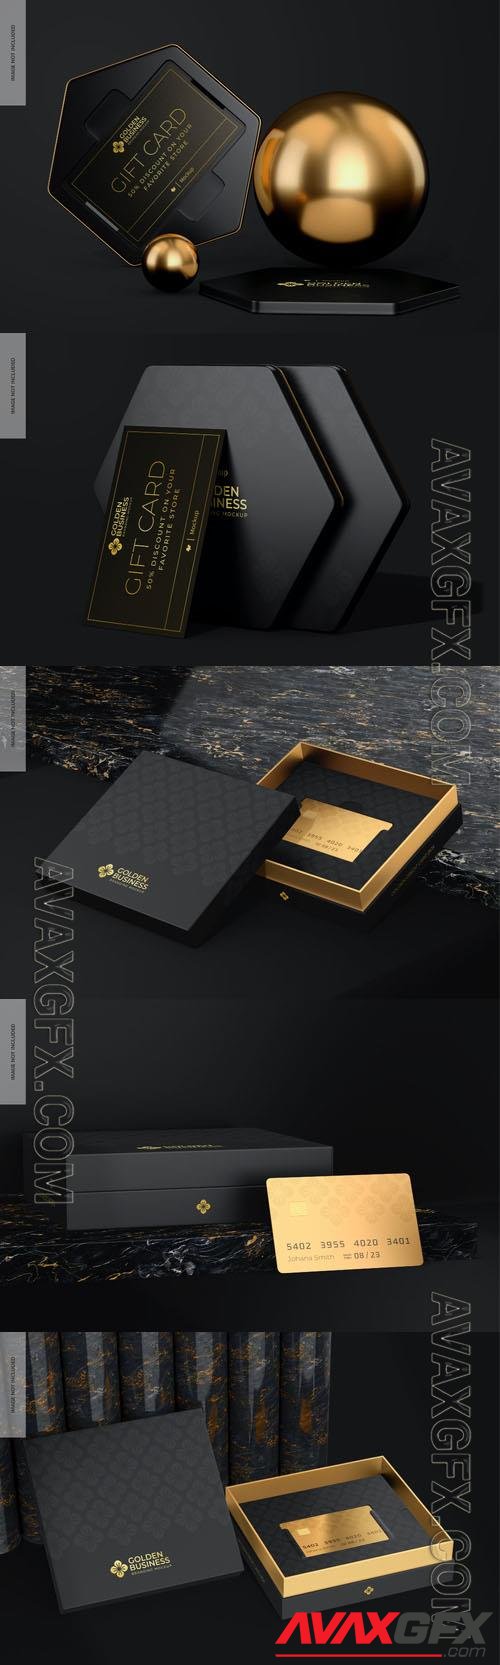 Golden credit card box psd template mockup beautiful design